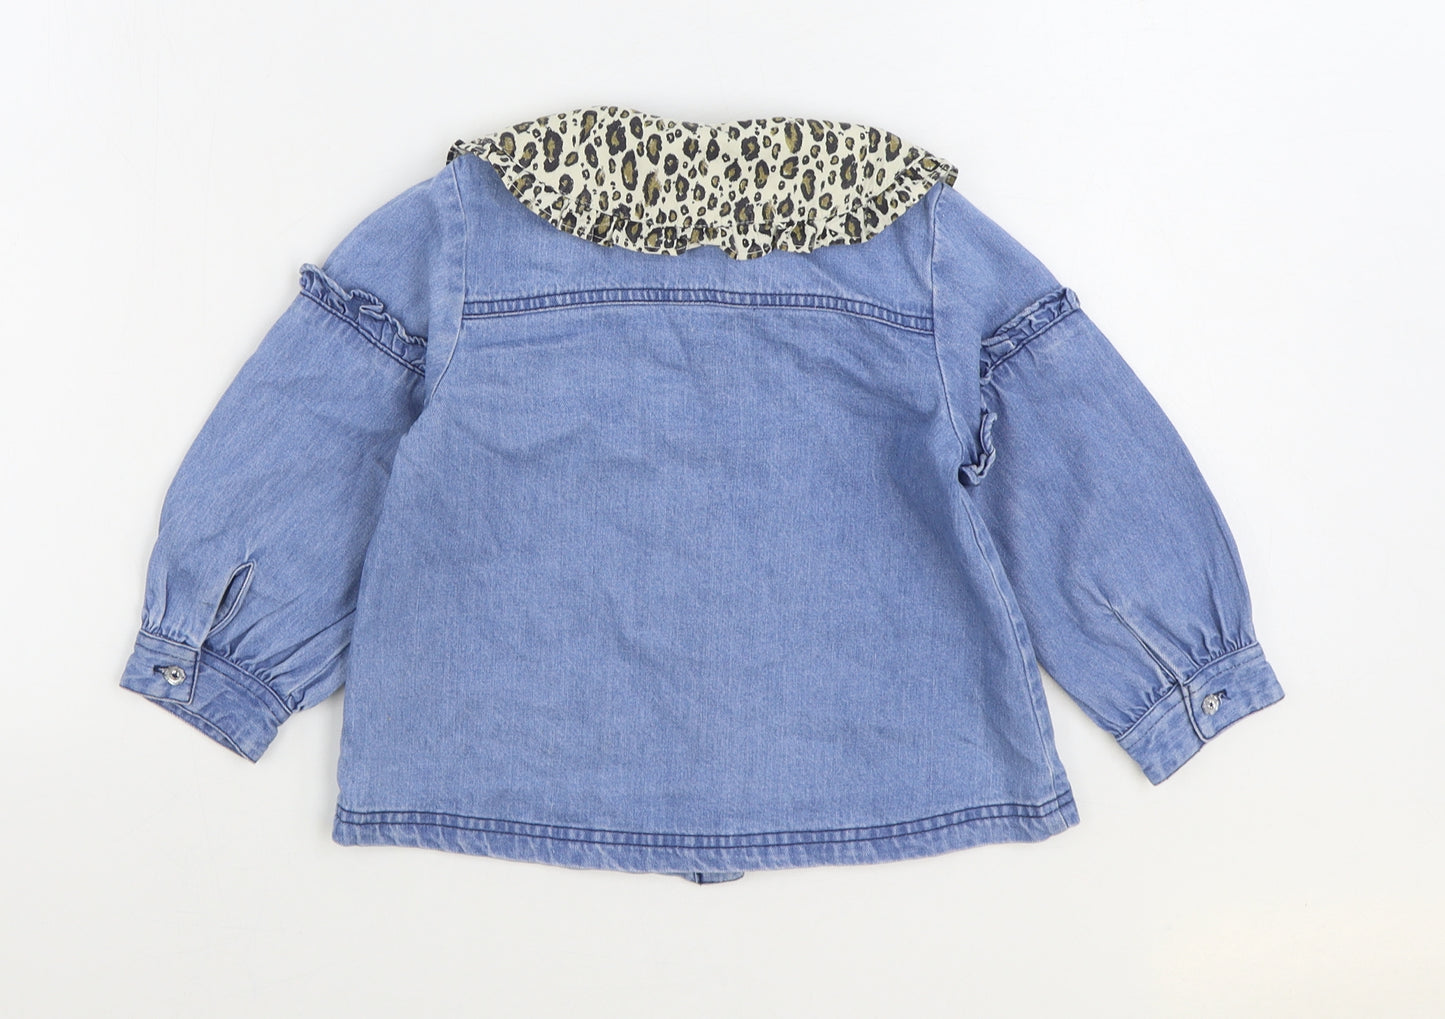 River Island Girls Blue Animal Print Jacket Size 3-4 Years Button - Leopard Print